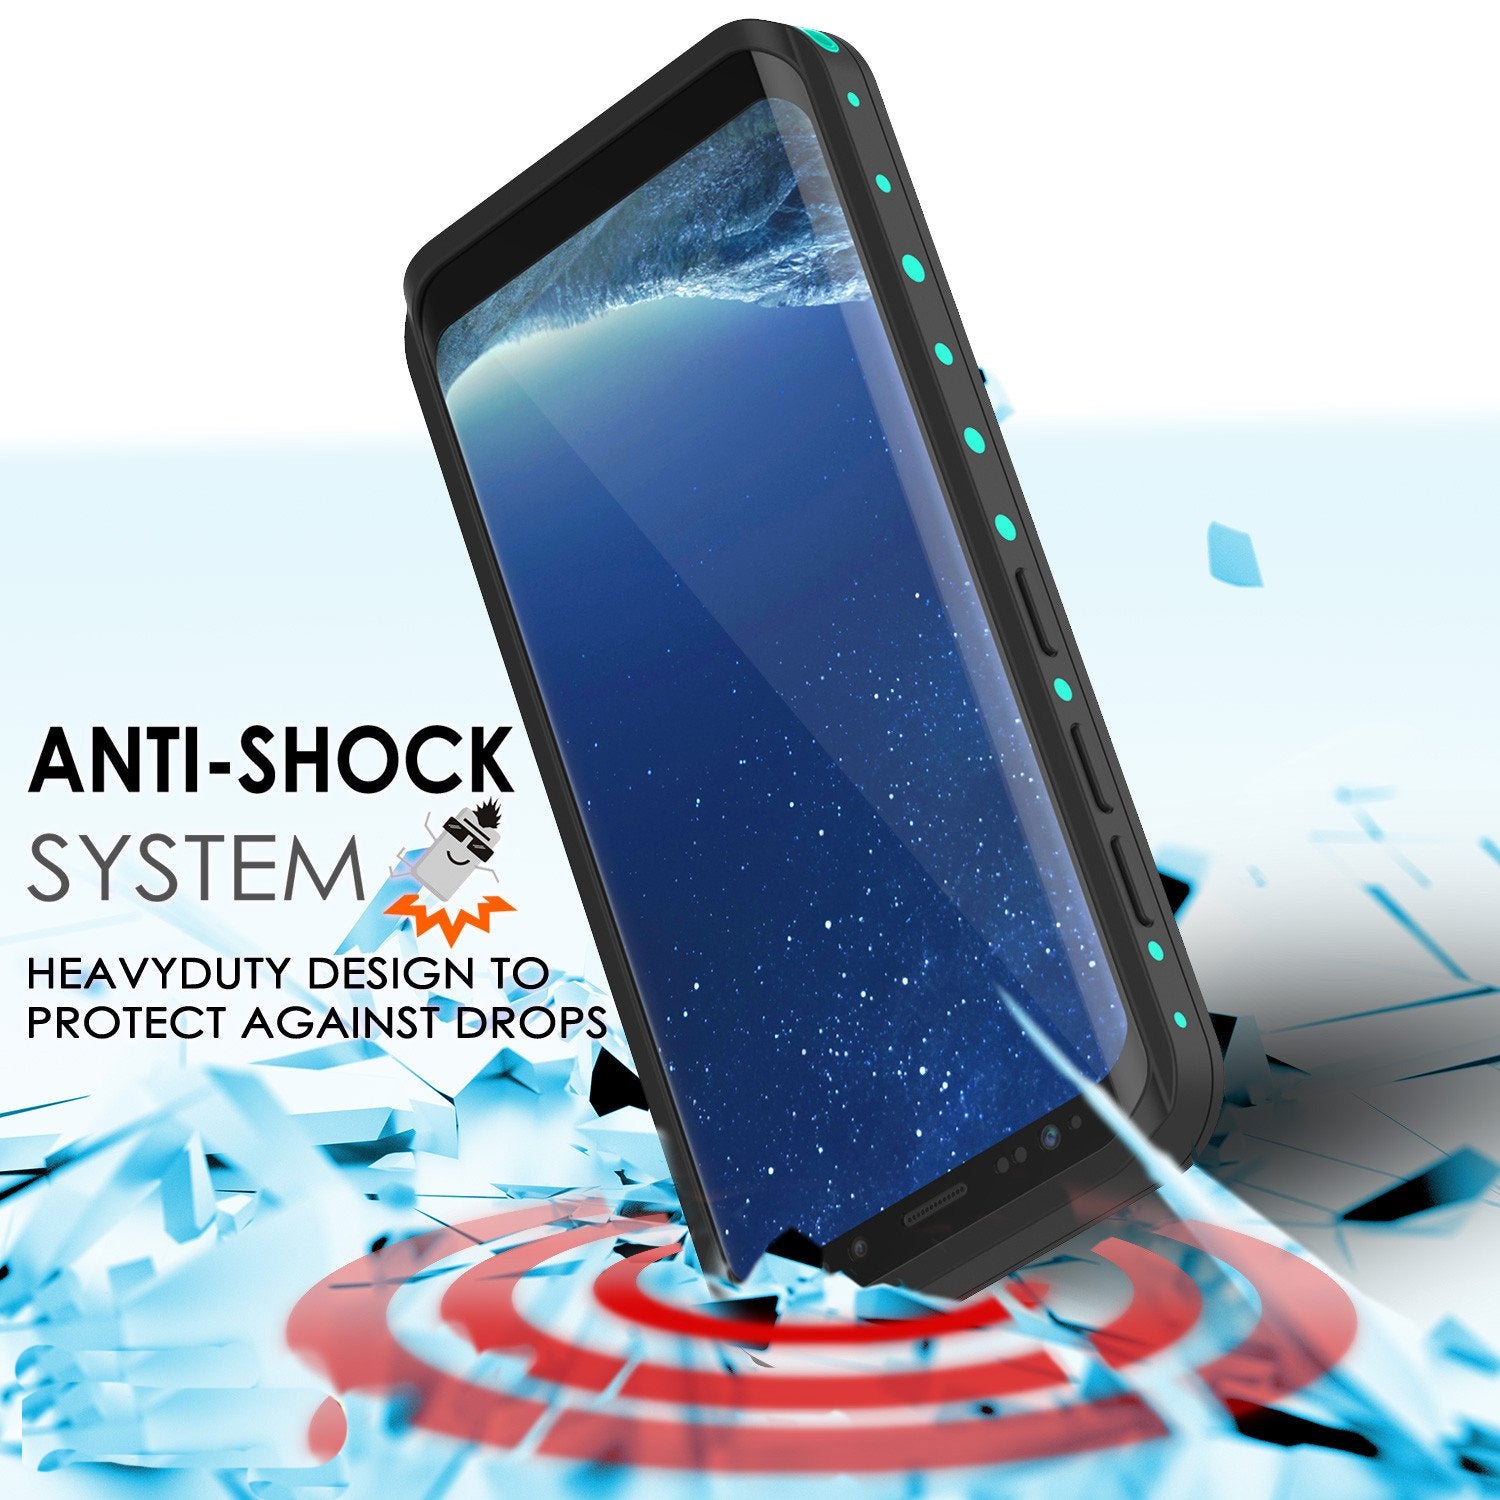 Galaxy S8 Waterproof Case PunkCase StudStar Teal Thin 6.6ft Underwater IP68 Shock/Snow Proof